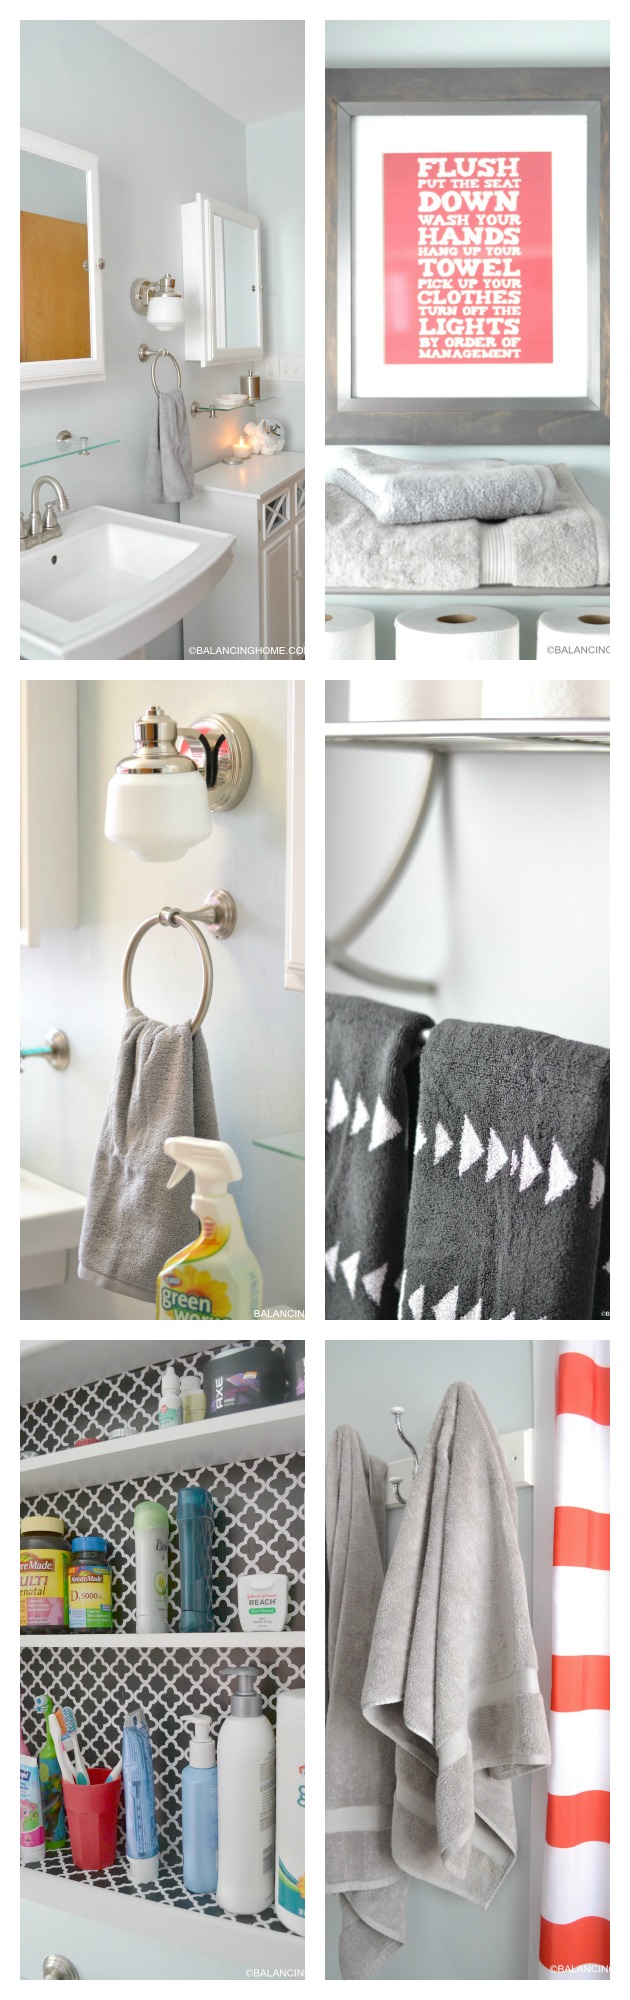 cleaning-organizing-bathroom-with-pedestal-sink-printable-bathroom-rules-art